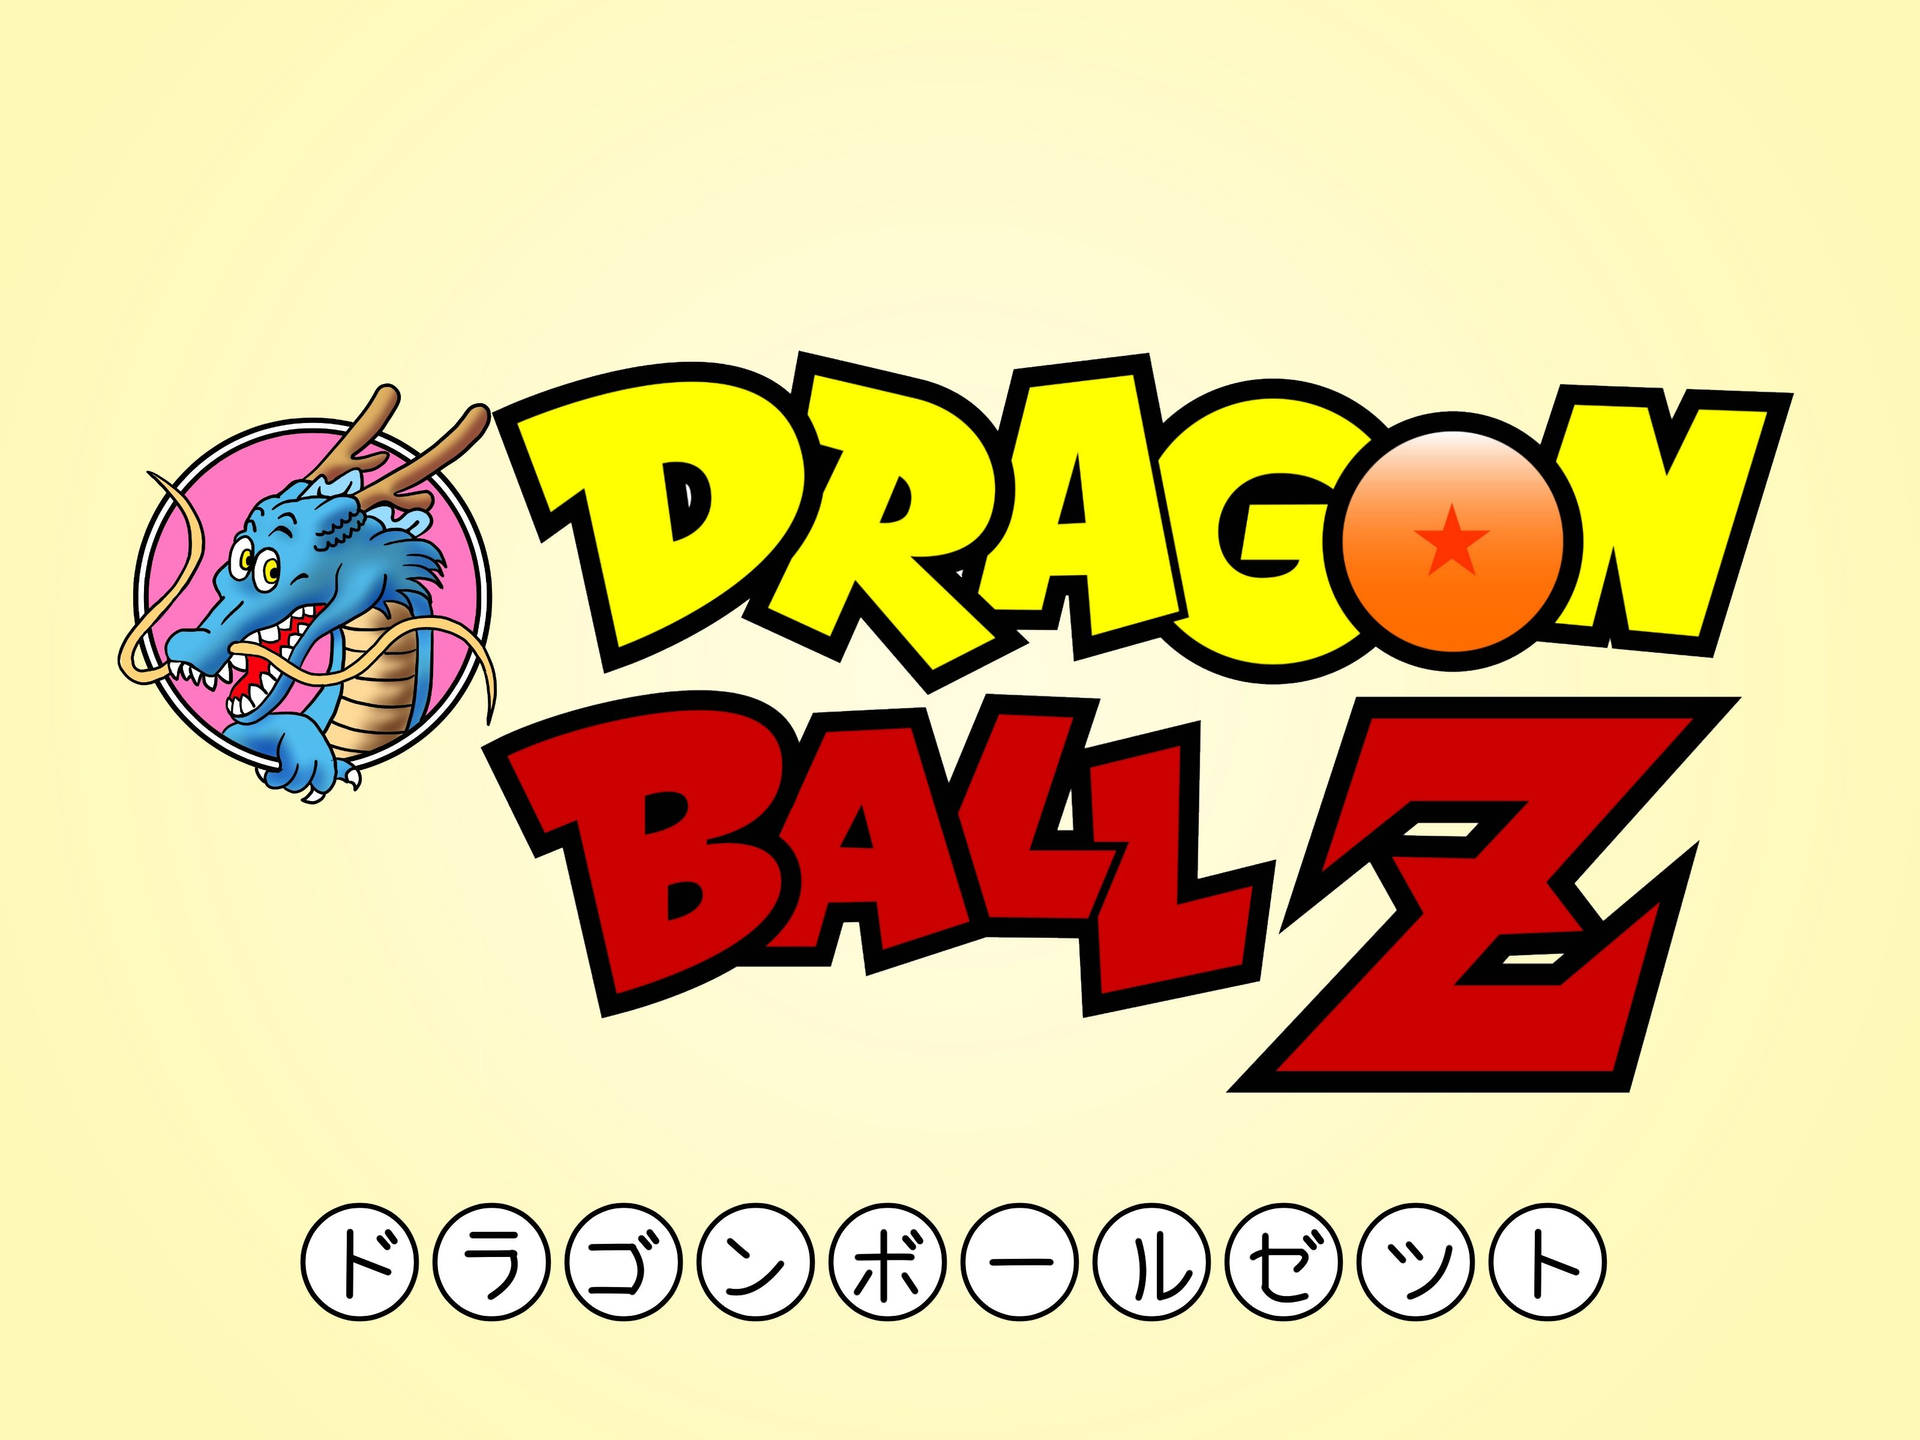 Daslogo Der Beliebten Anime-serie: Dragon Ball Z Wallpaper